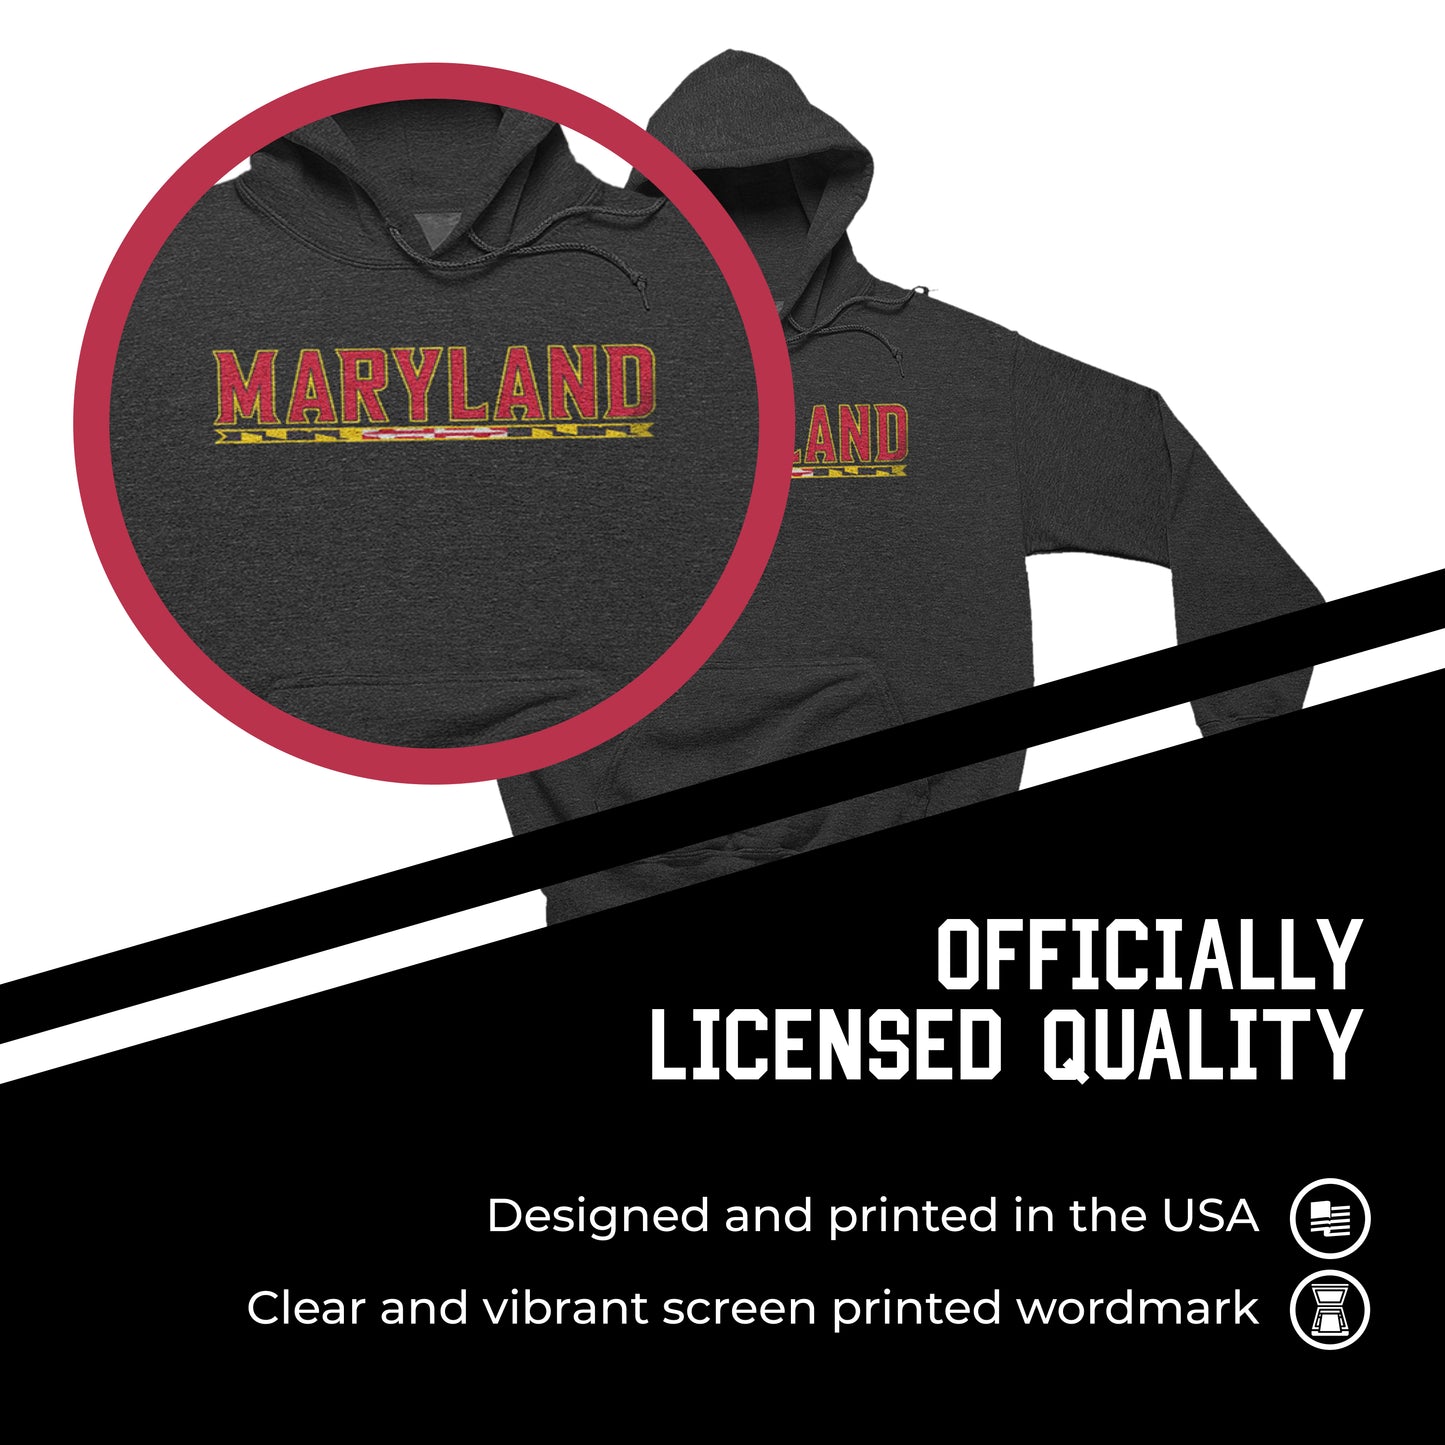 Maryland Terrapins NCAA Adult Cotton Blend Charcoal Hooded Sweatshirt - Charcoal